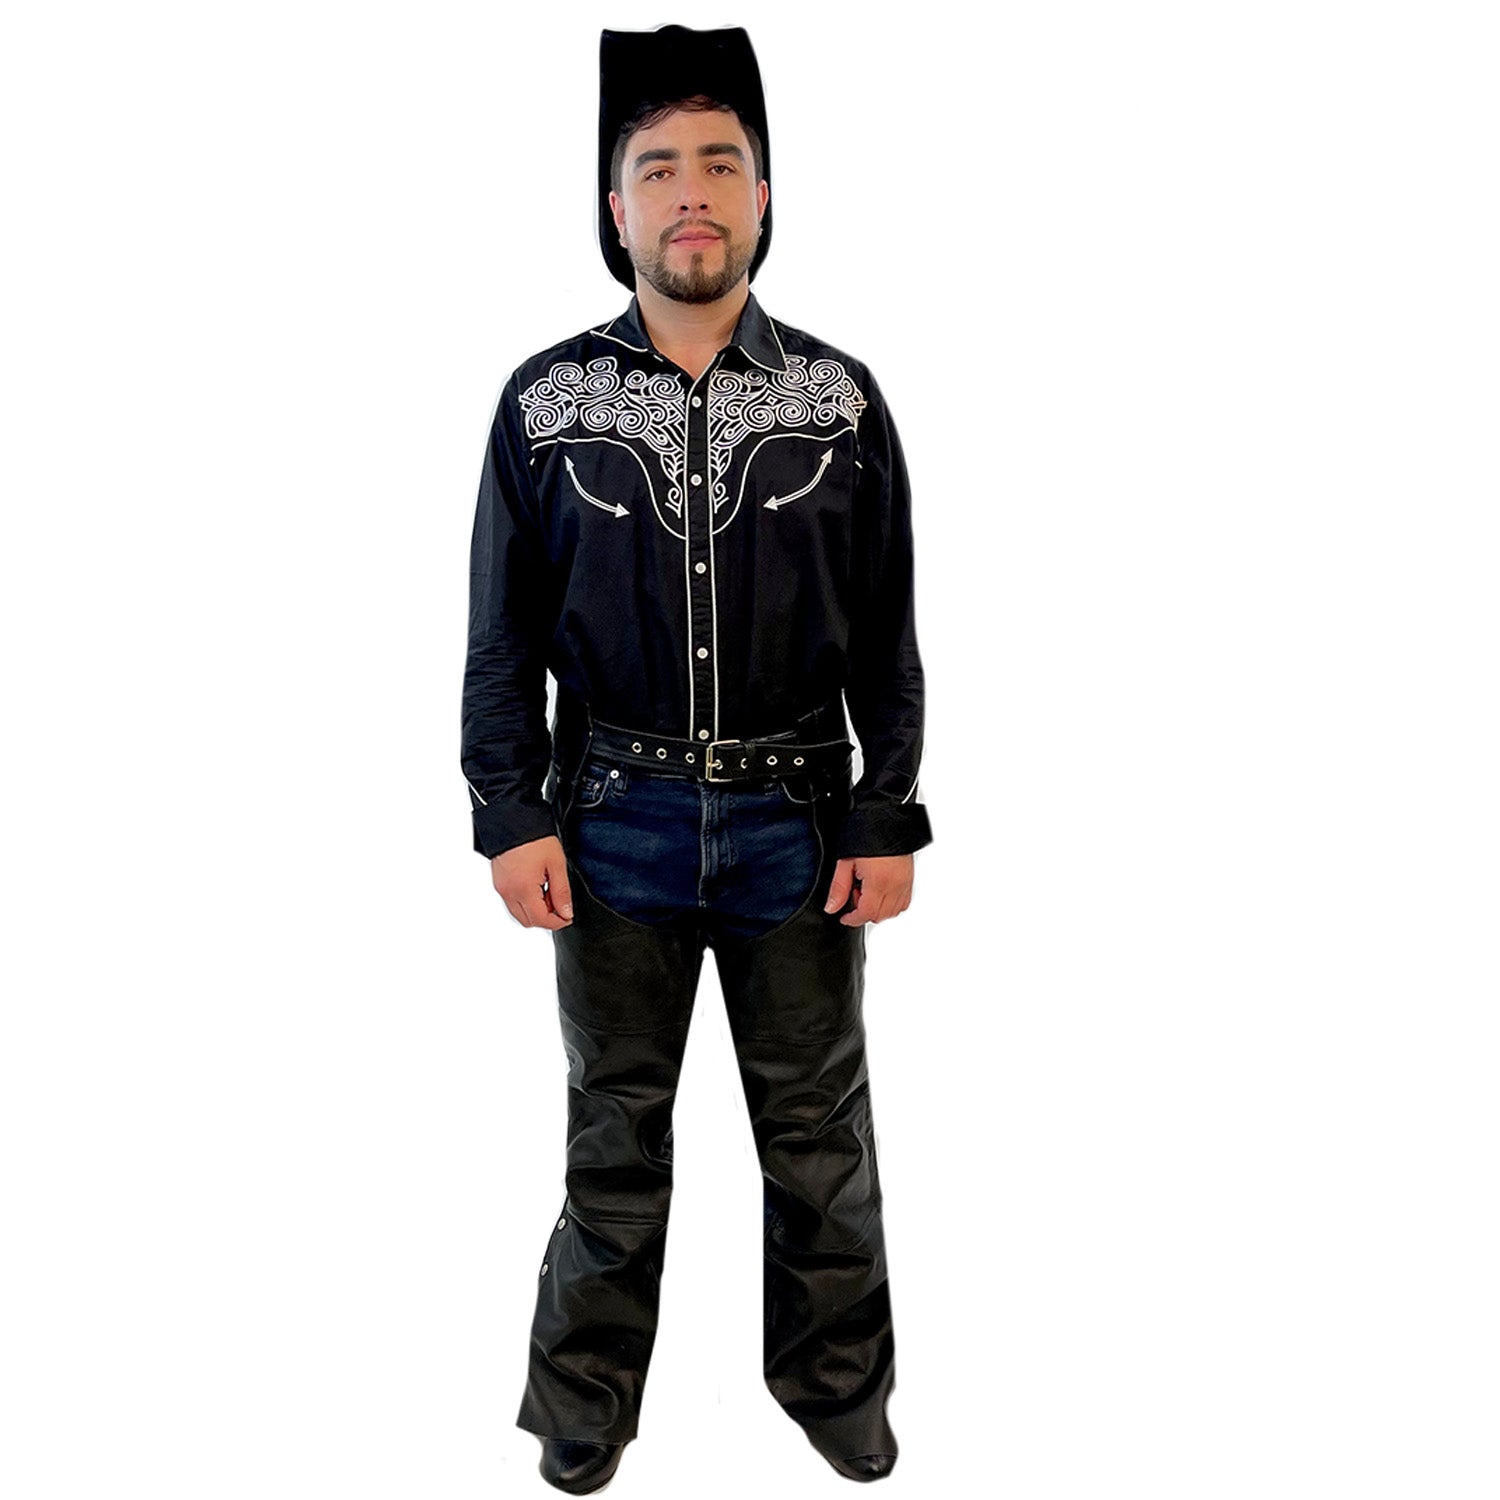 Exclusive Wild West Cowboy Adult Costume